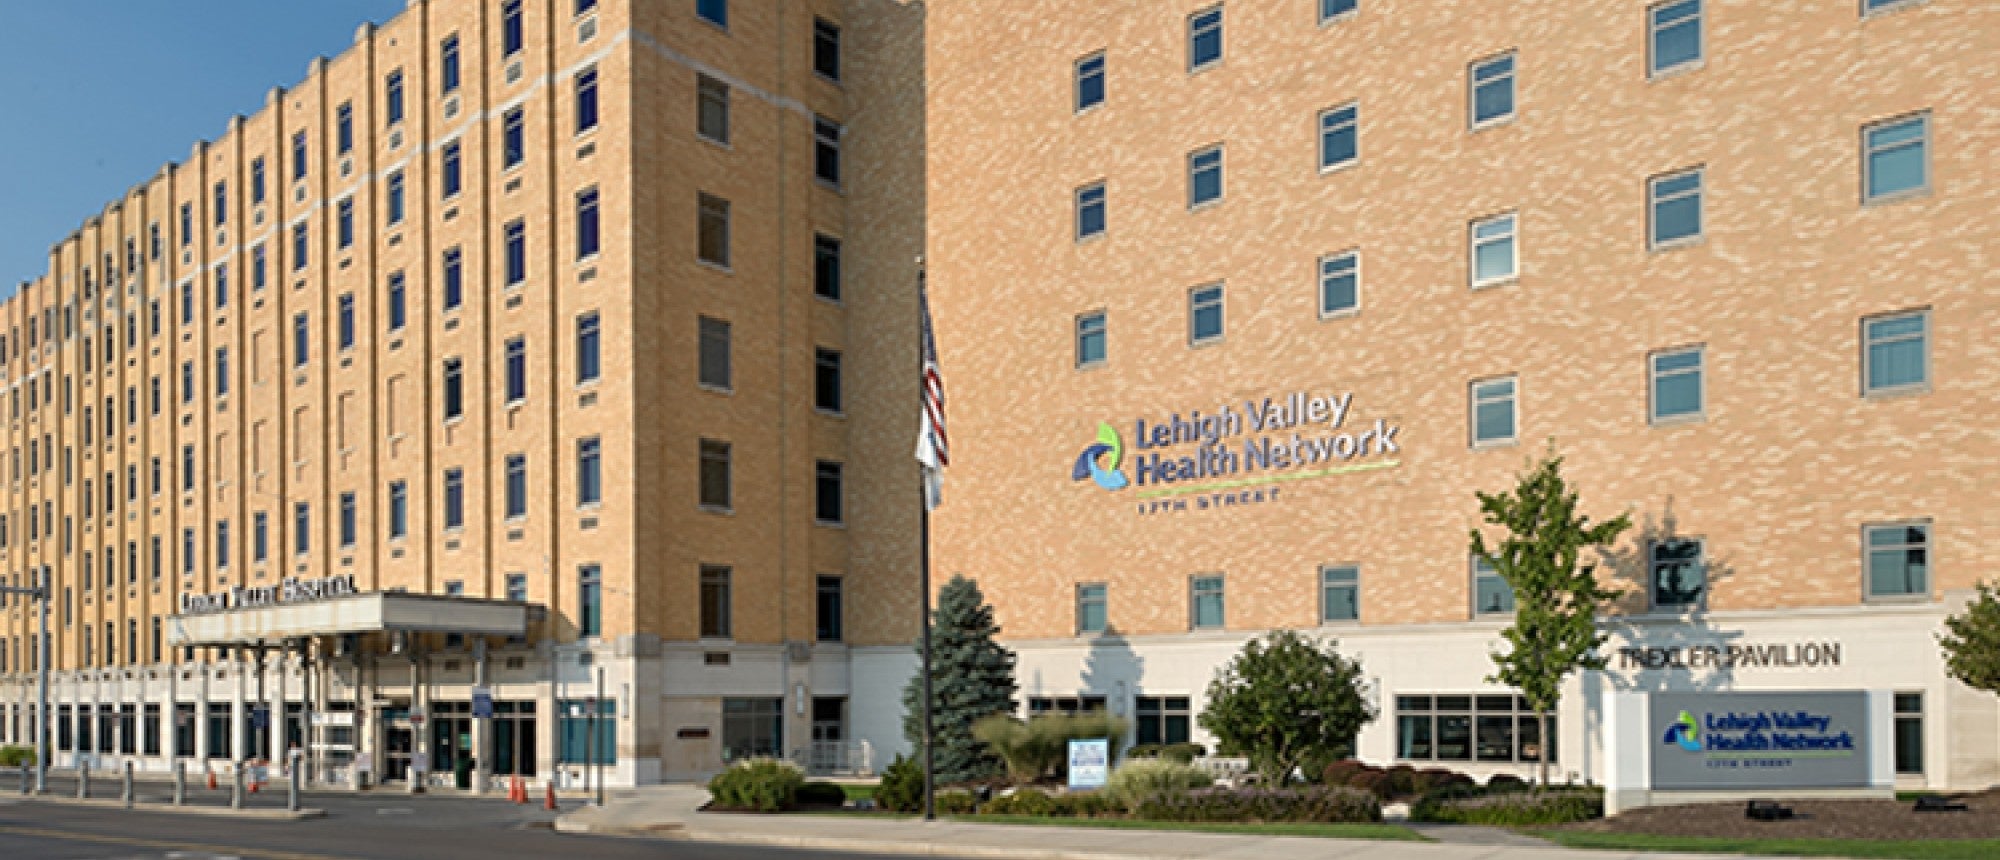 Dental Clinic at Lehigh Valley Hospital-17th Street